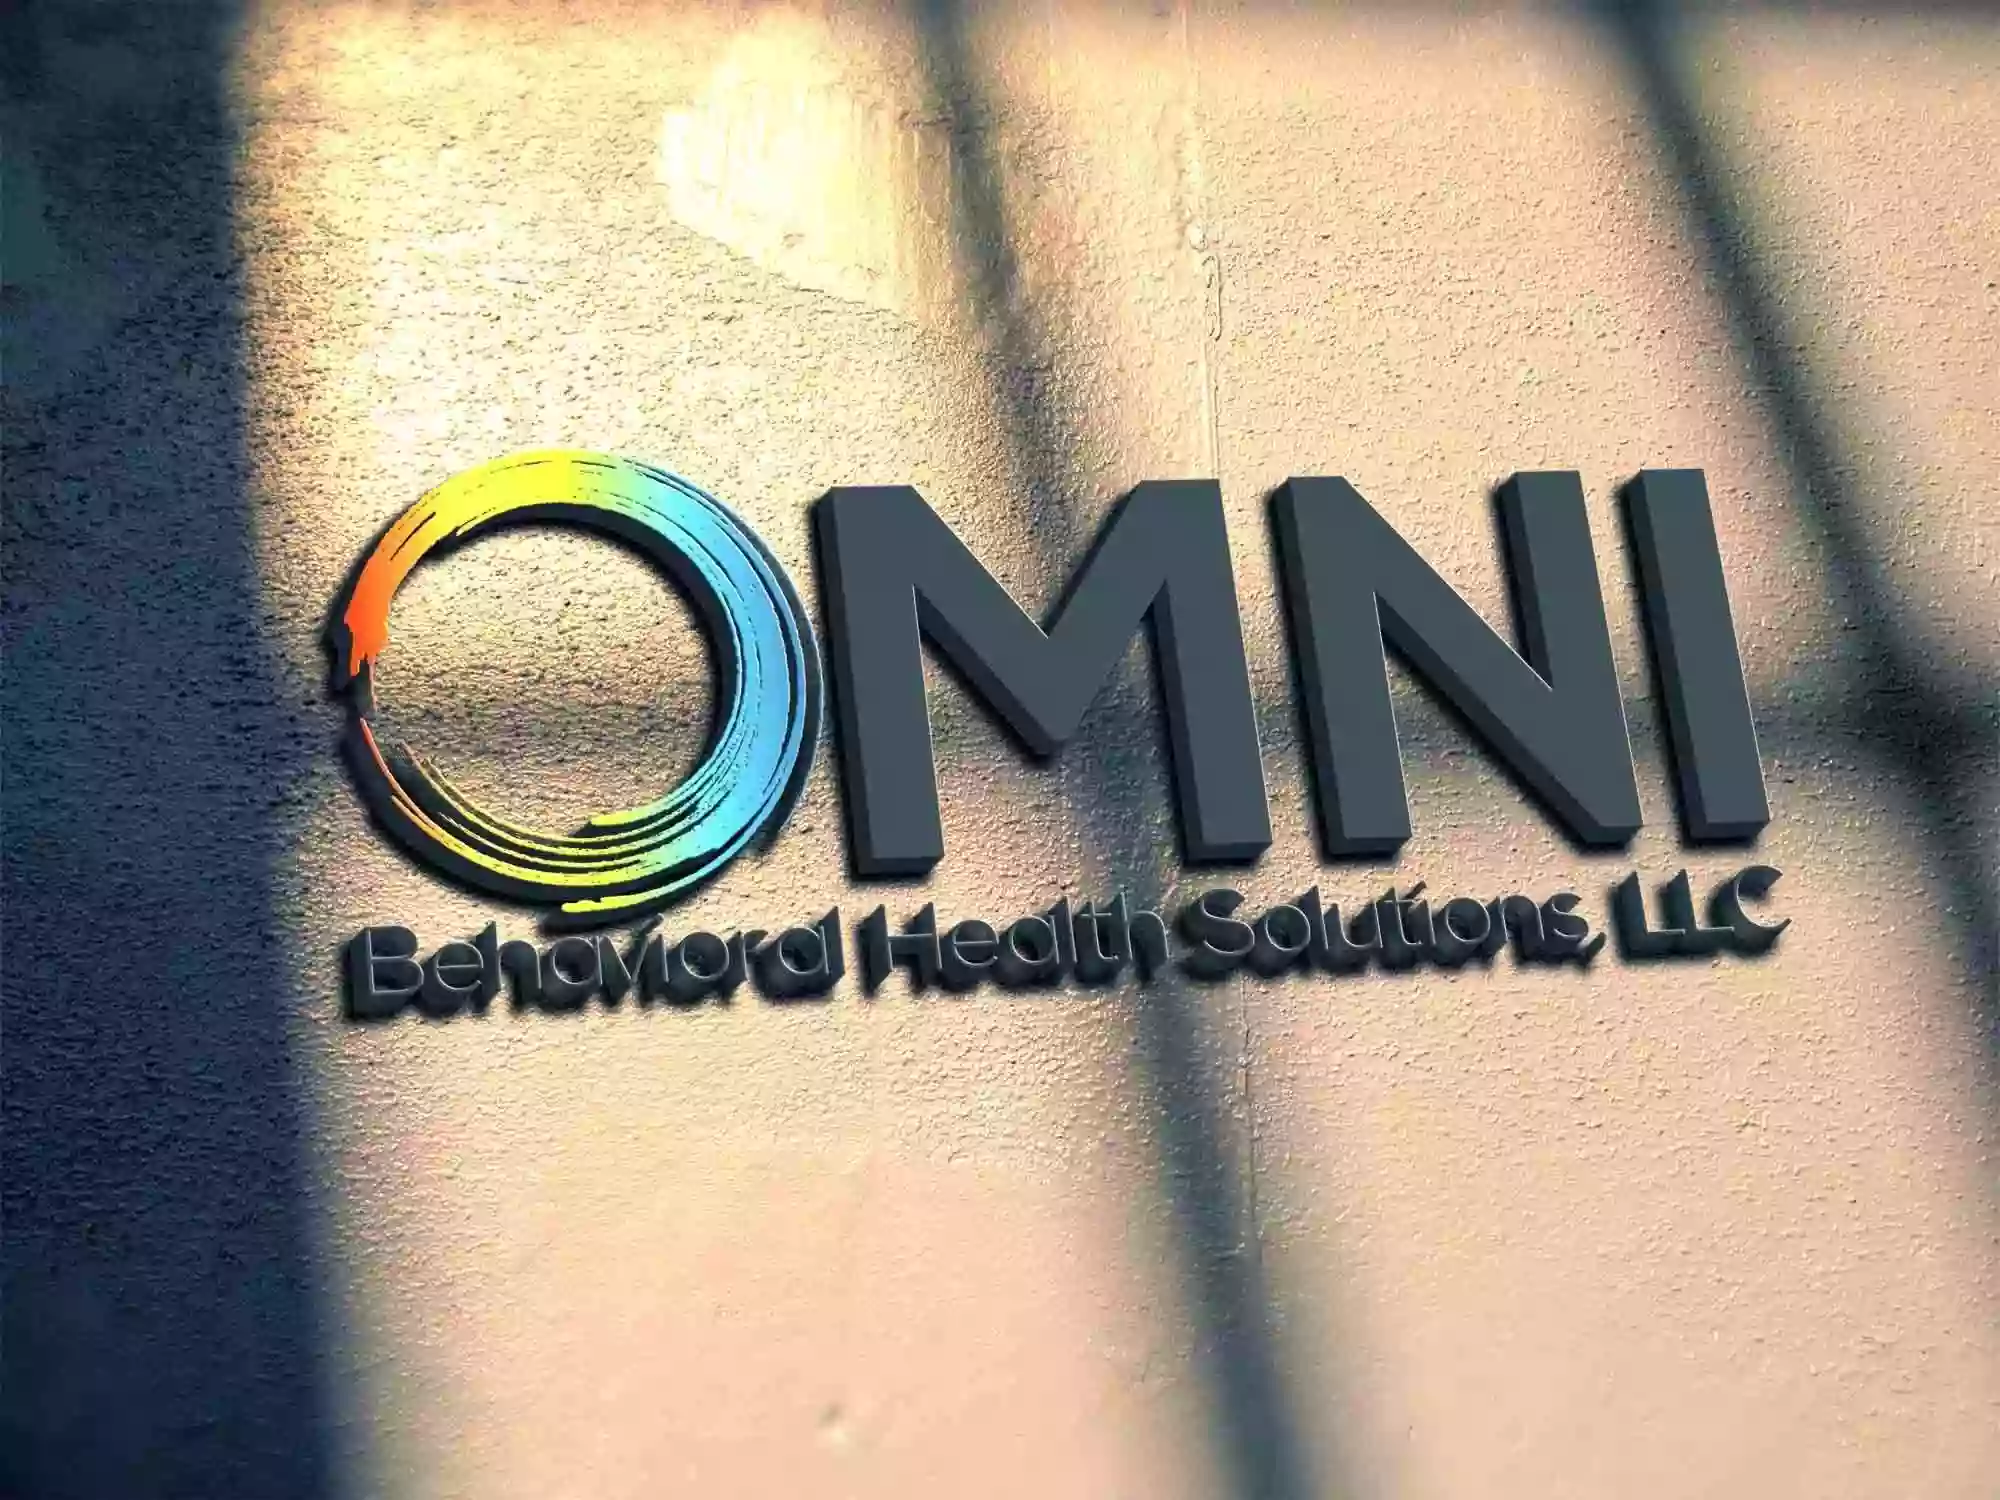 OMNI Behavioral Health Solutions, LLC